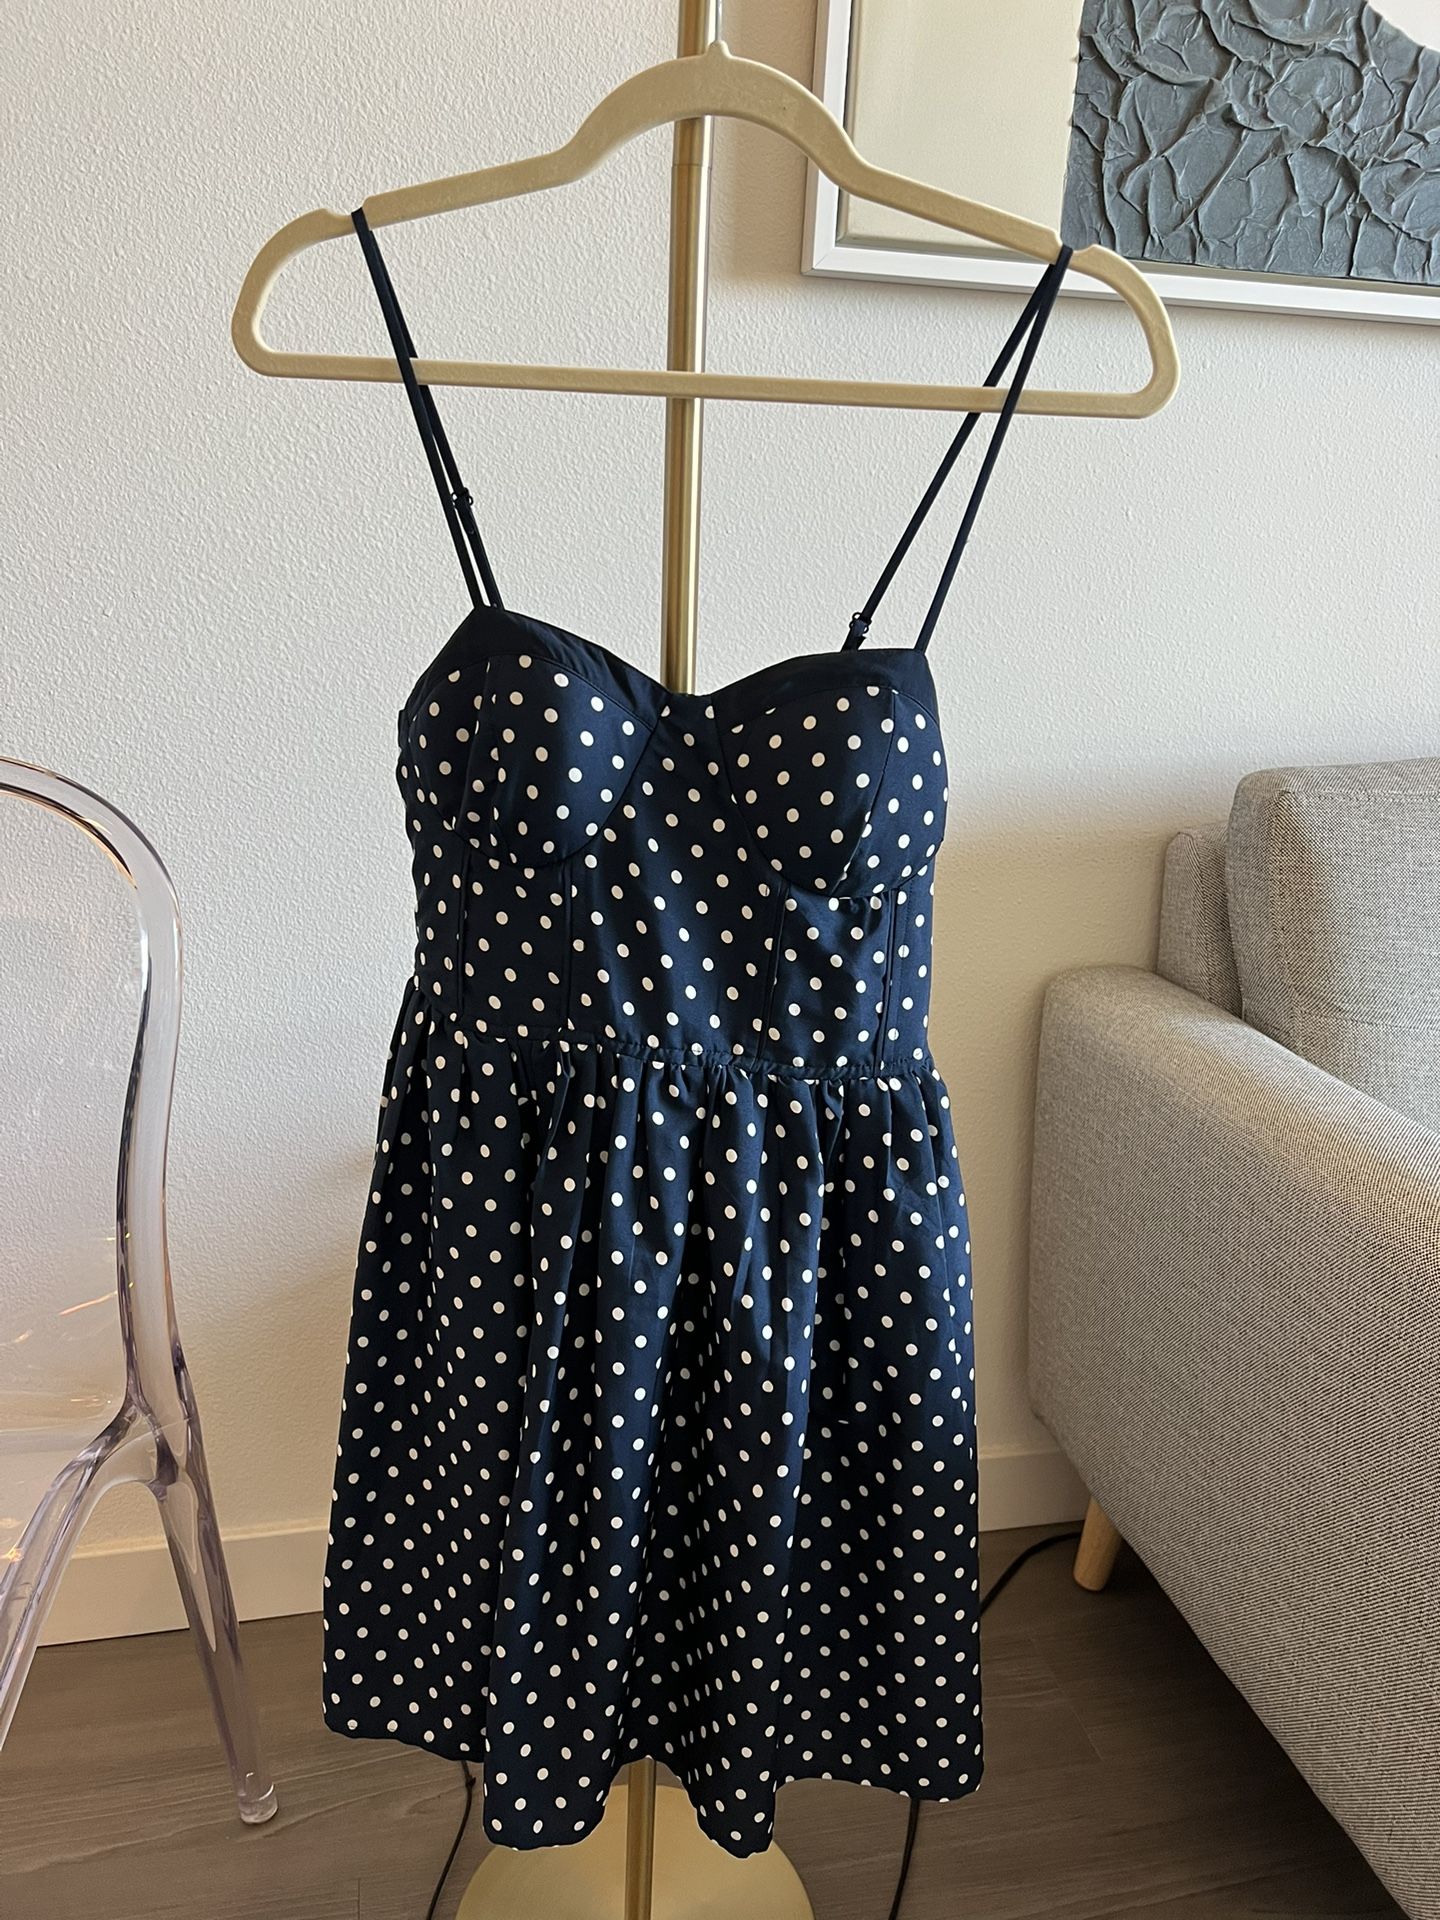 Retro navy blue and white polka dot dress - size small